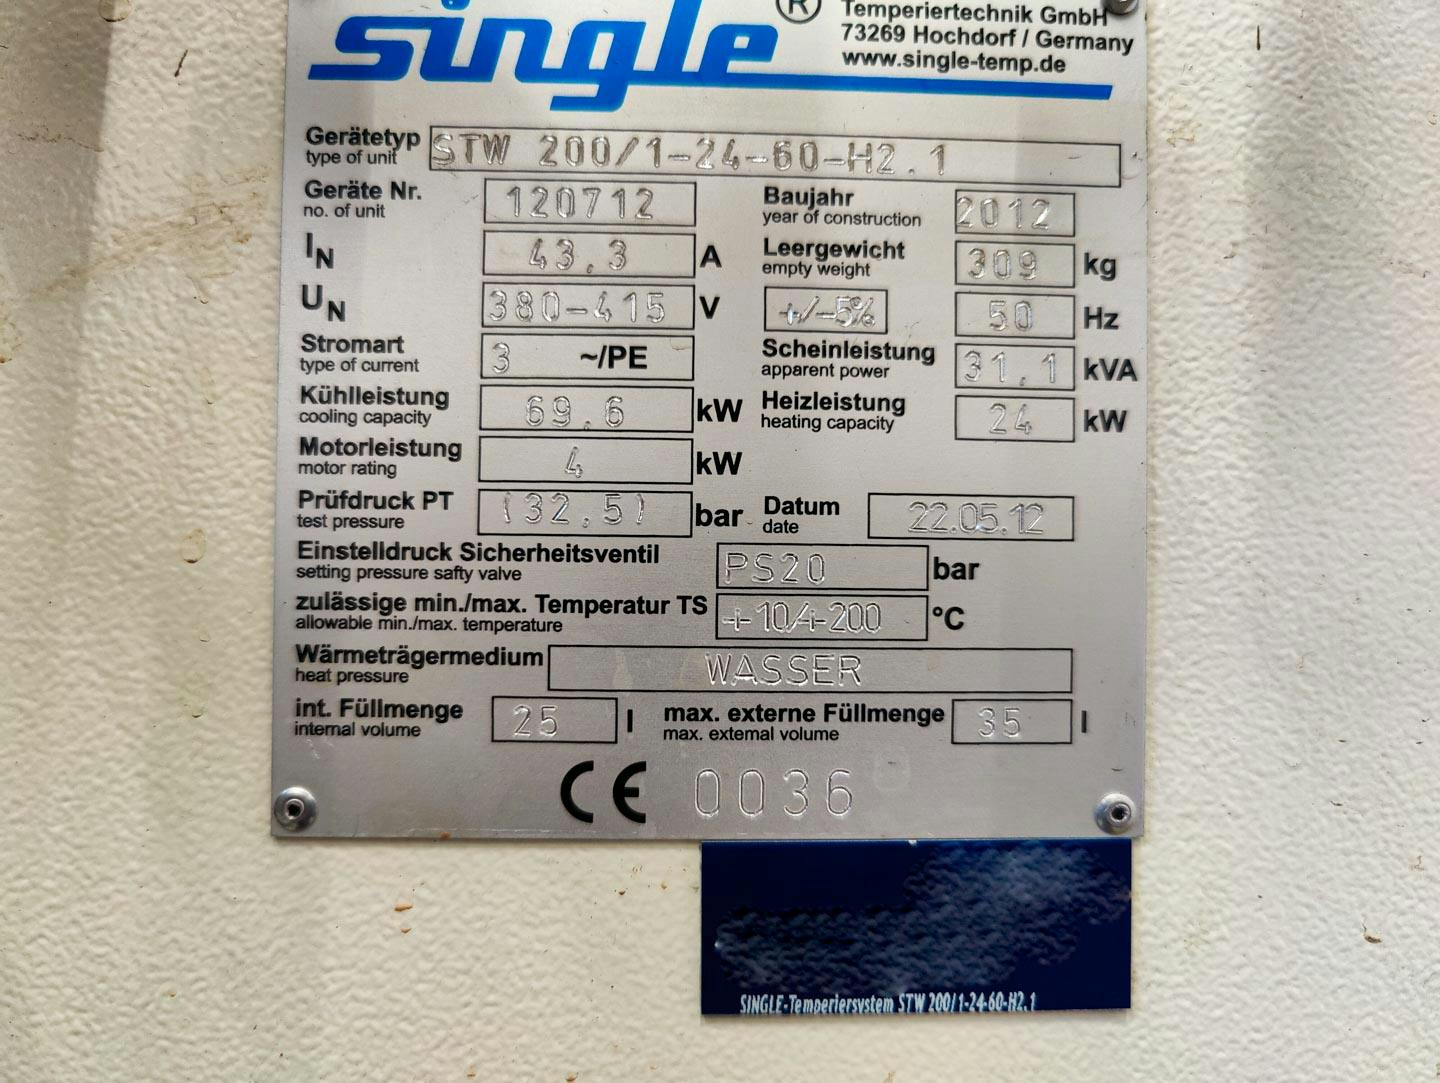 Single Temperiertechnik STW 200/1-24.60-H2.1 - Atemperador - image 7